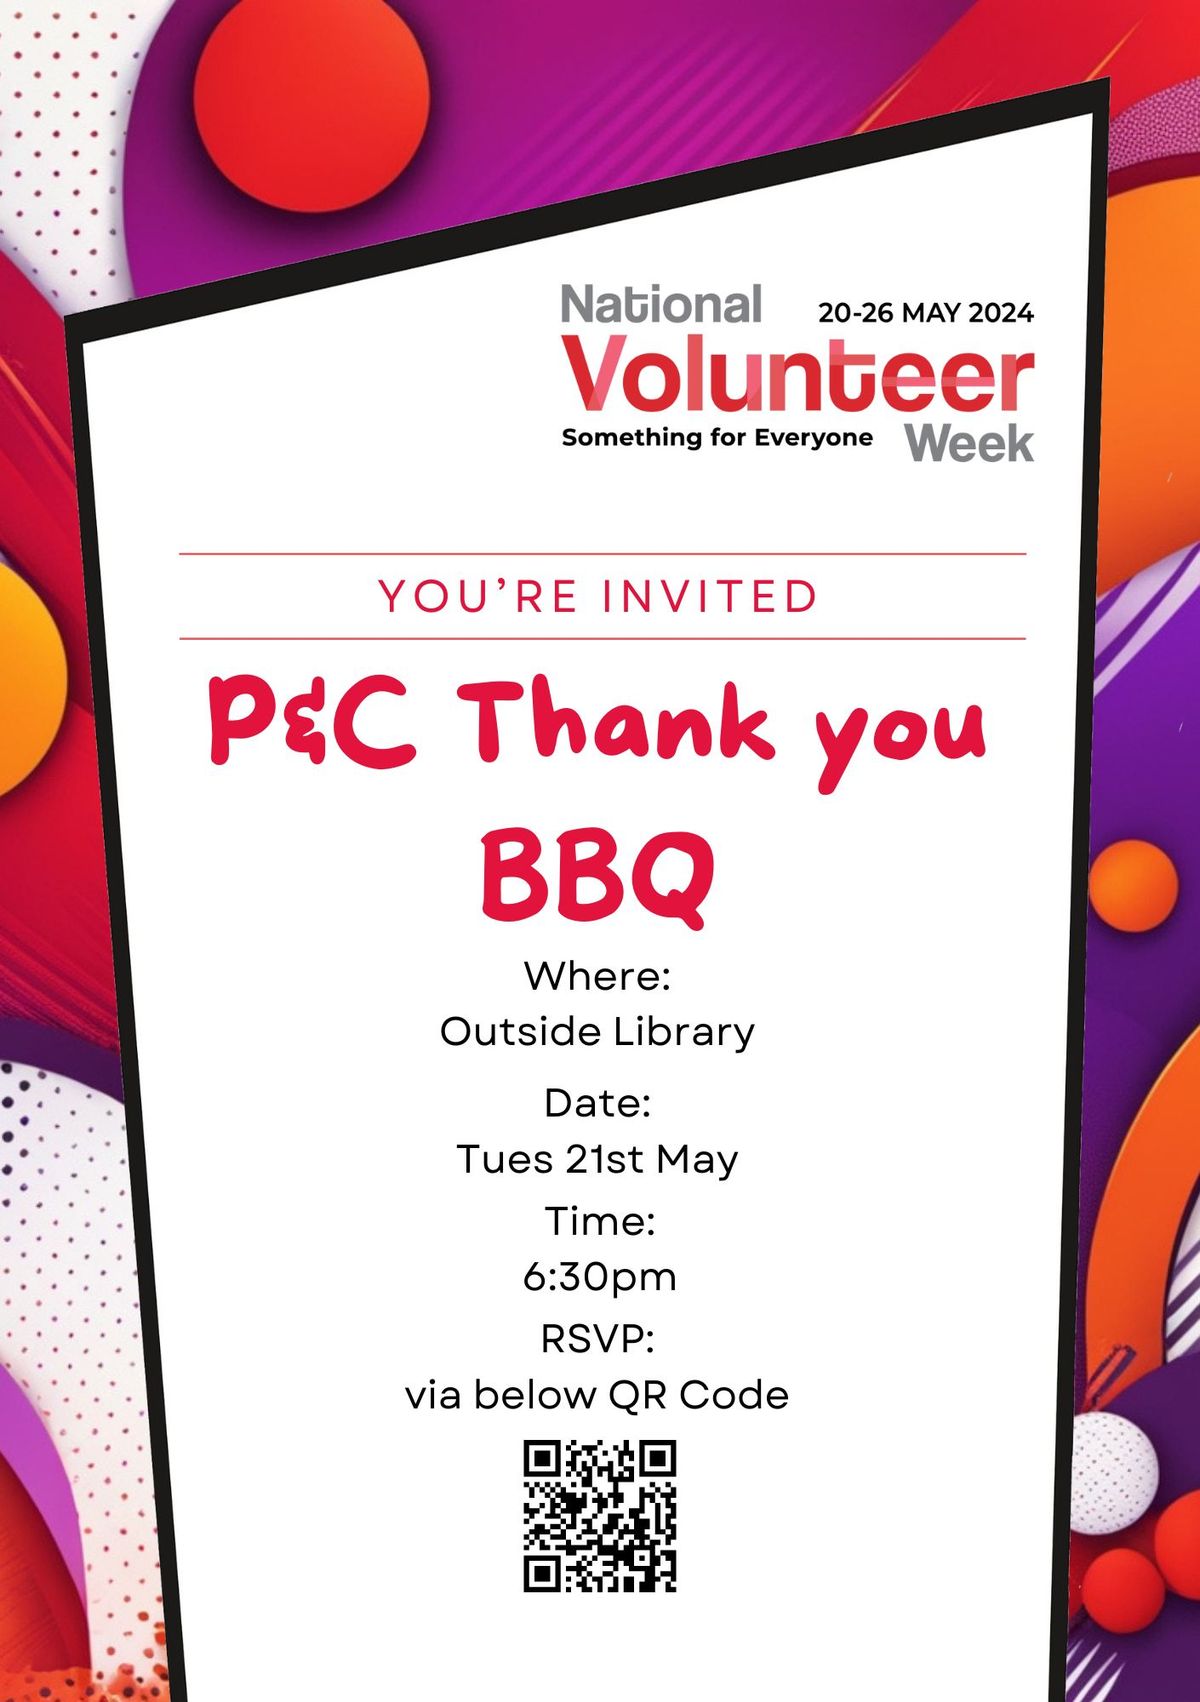 P&C Thank You BBQ- National Volunteer Week